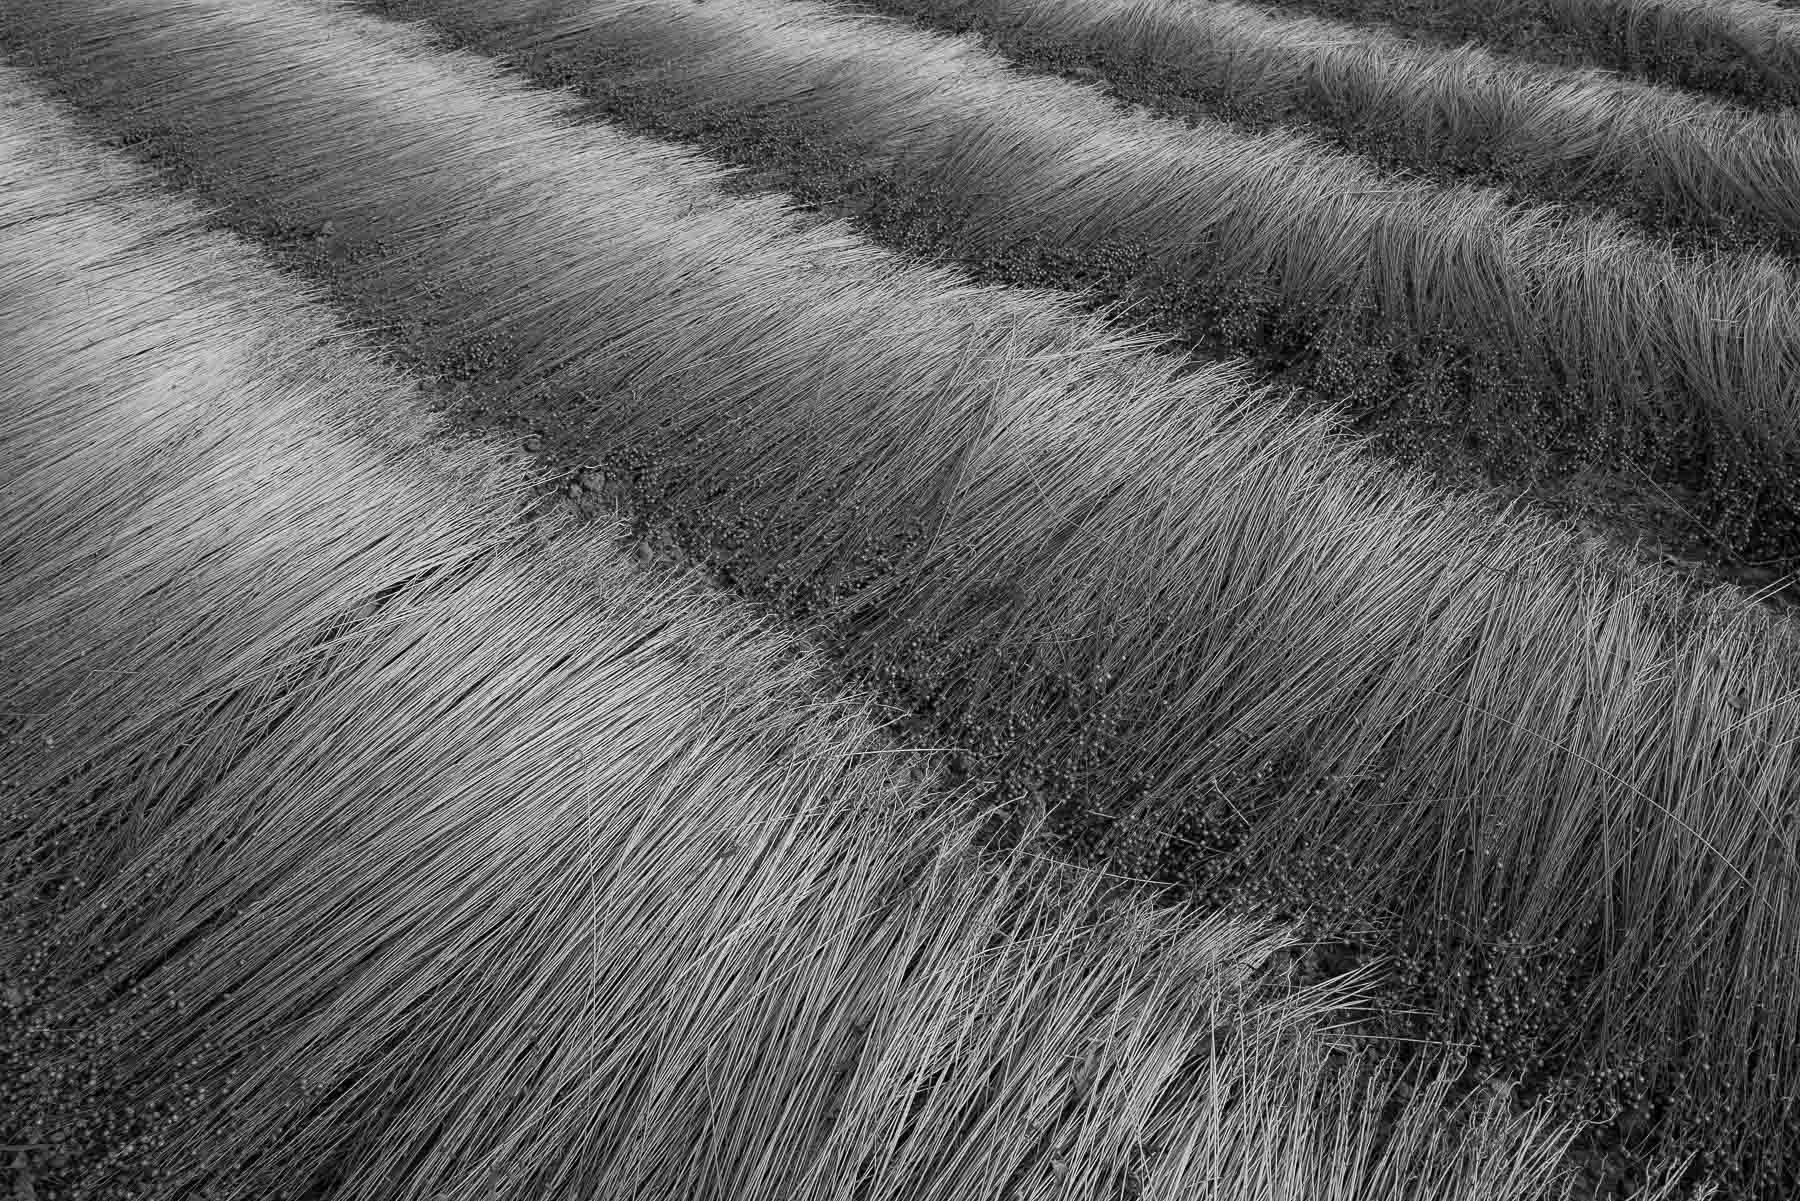  Freshly-cut lin crop, Normandy 